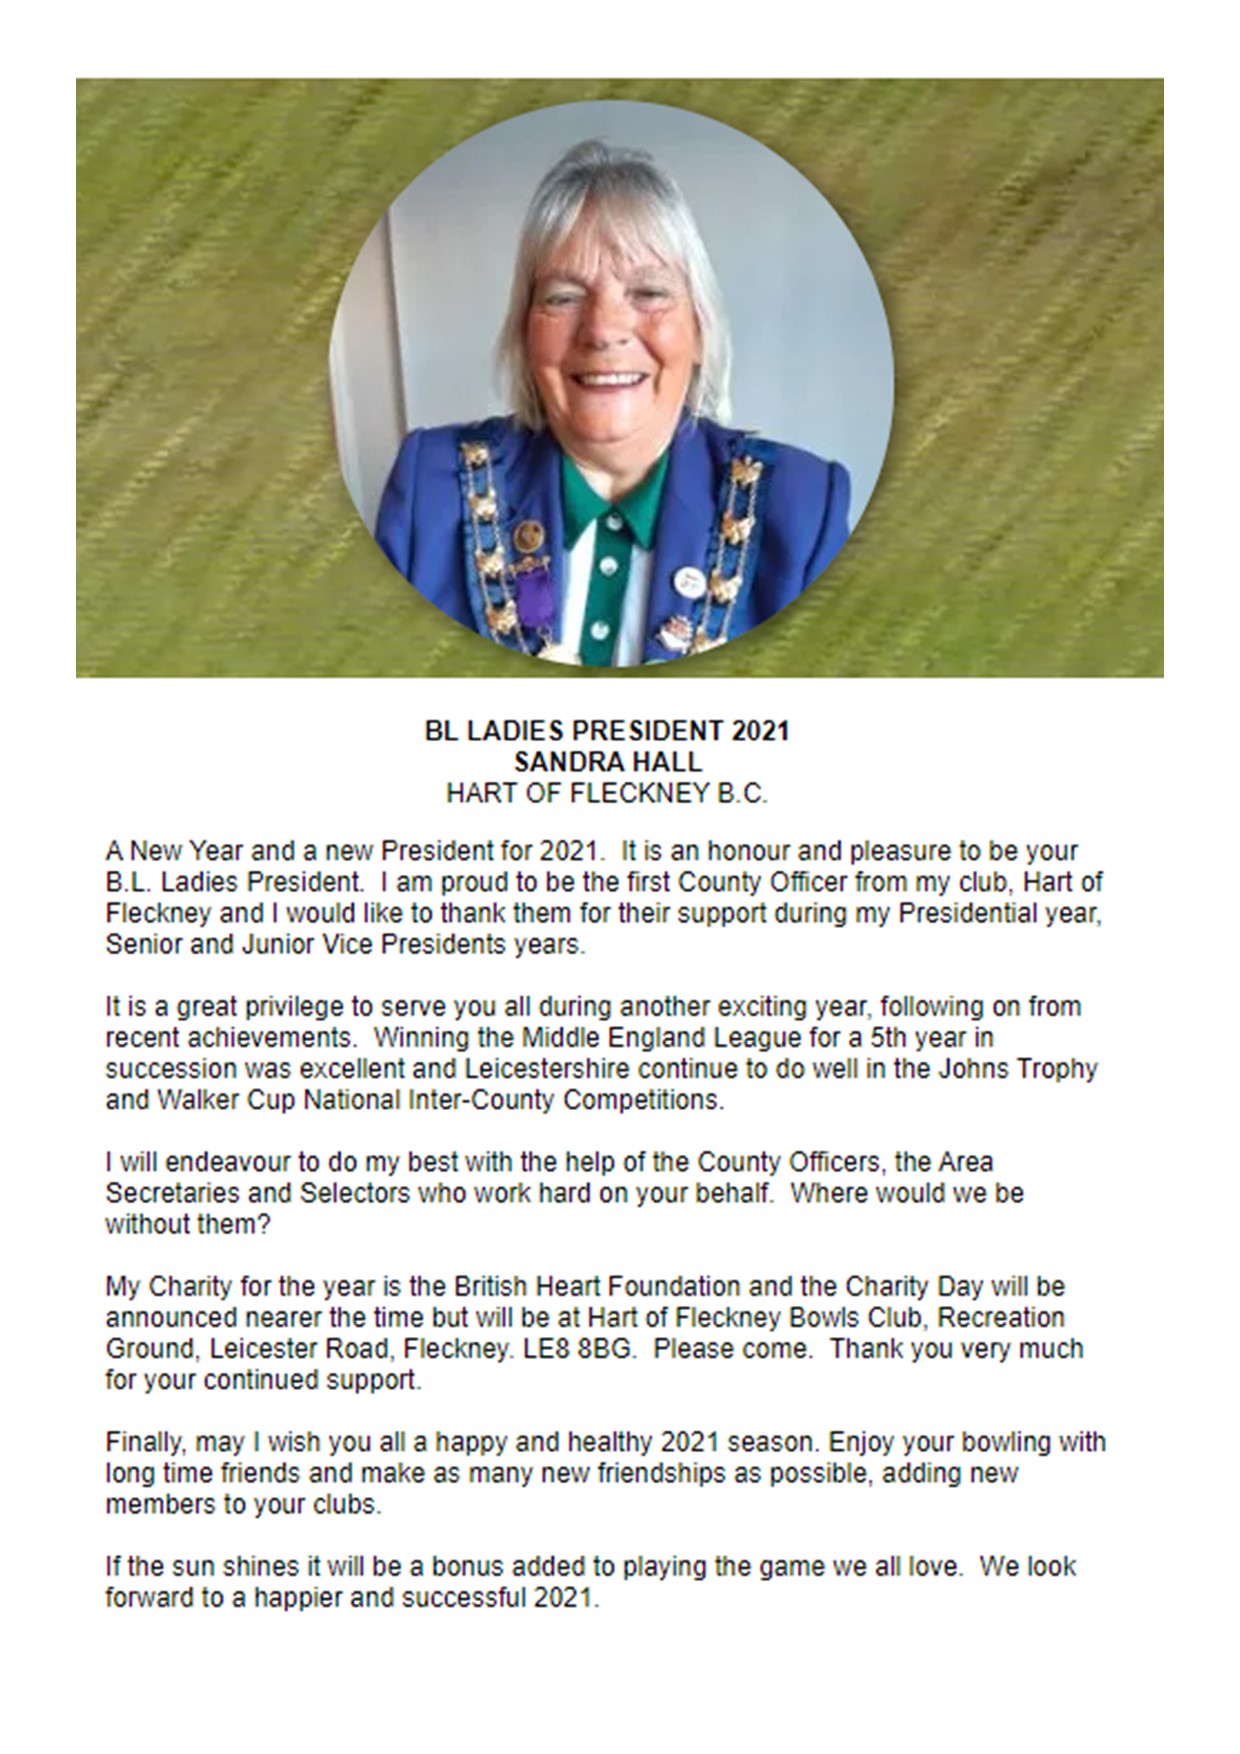 Hart of Fleckney Bowls Club Ladies County President